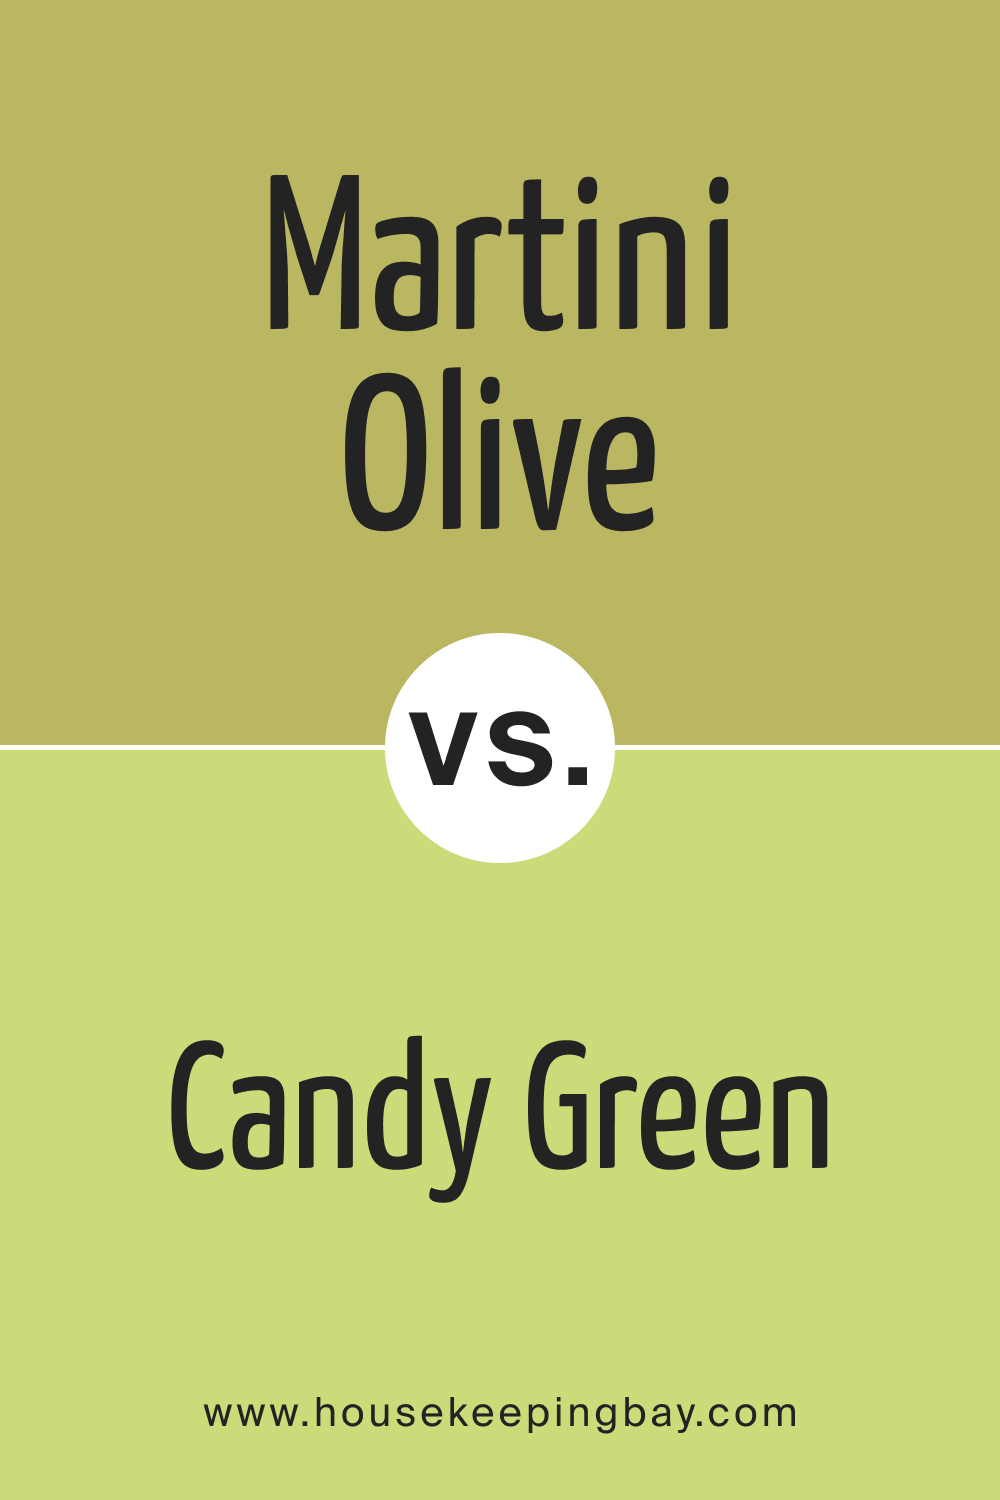 Martini Olive CSP-890 vs. BM 403 Candy Green